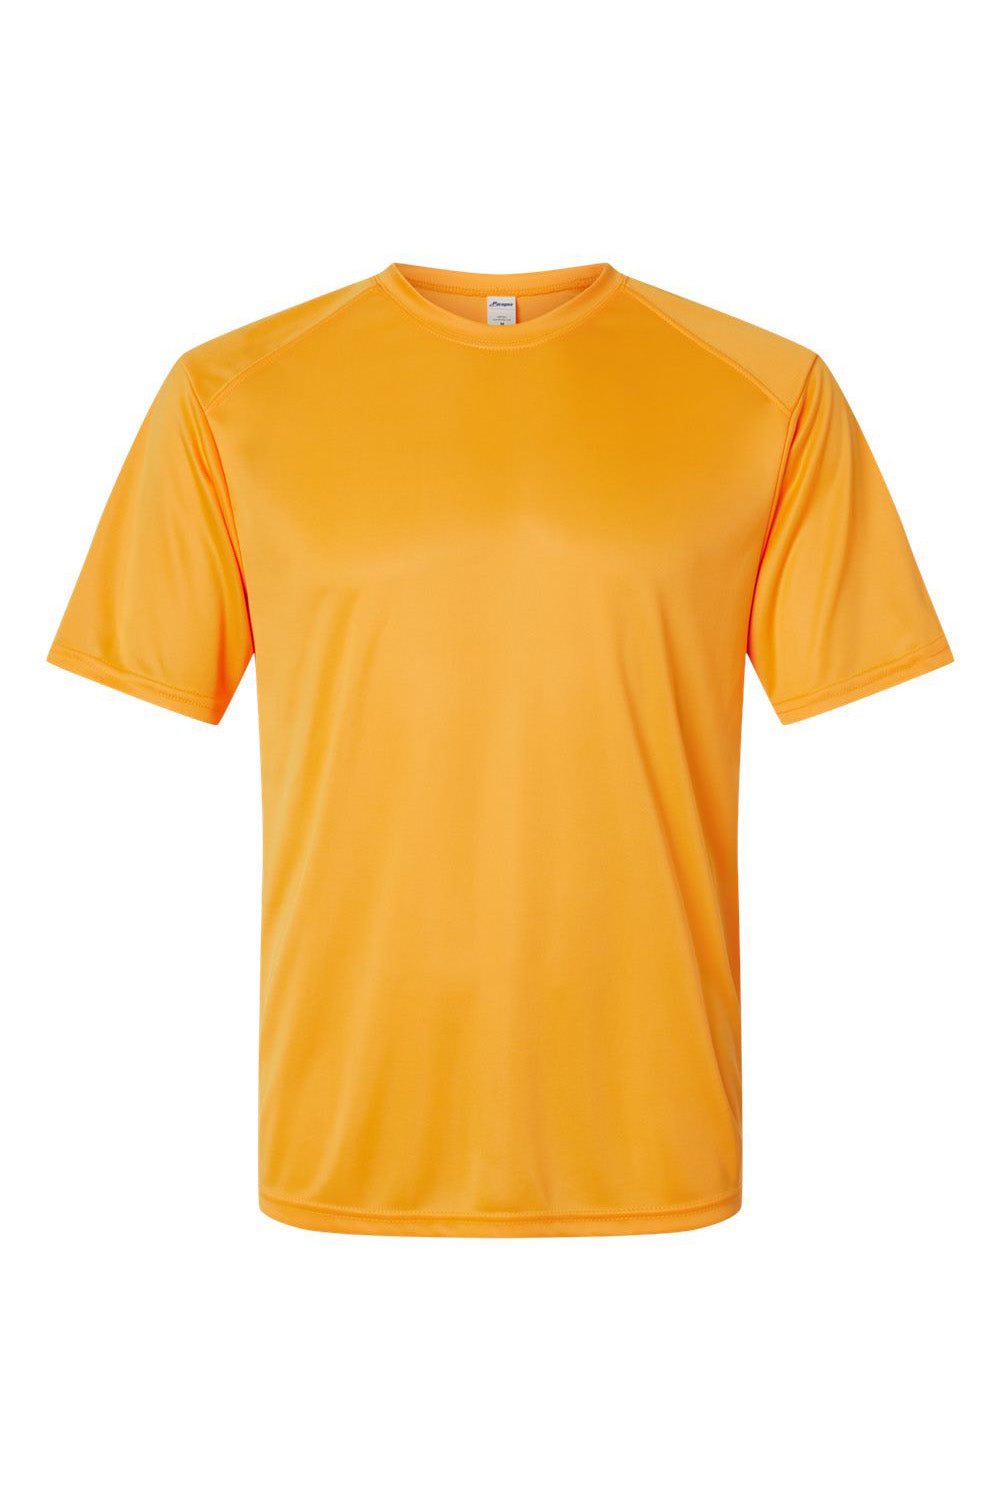 Paragon 200 Mens Islander Performance Short Sleeve Crewneck T-Shirt Gold Flat Front